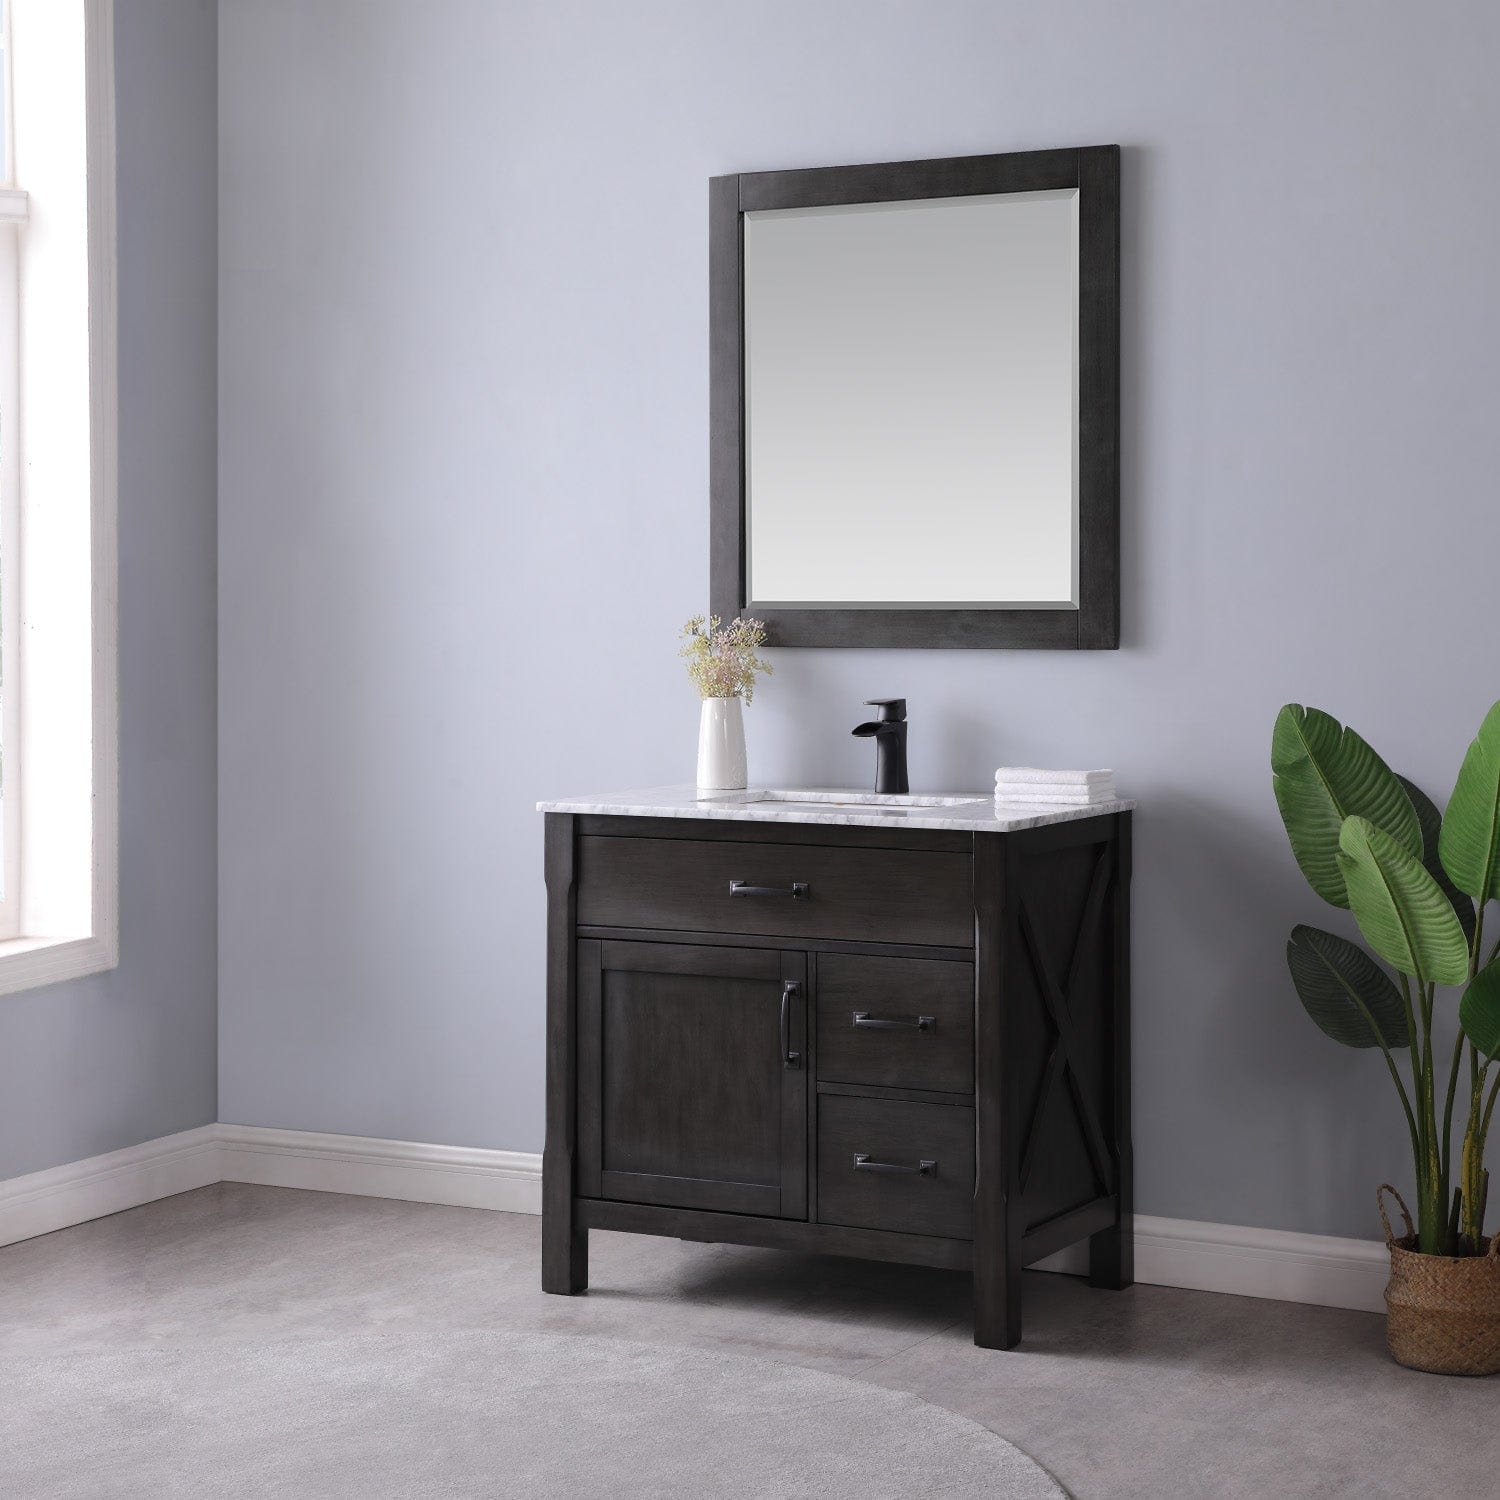 Altair Maribella 36" Single Bathroom Vanity Set in Rust Black and Carrara White Marble Countertop with Mirror 535036-RL-CA - Molaix631112970273Vanity535036-RL-CA